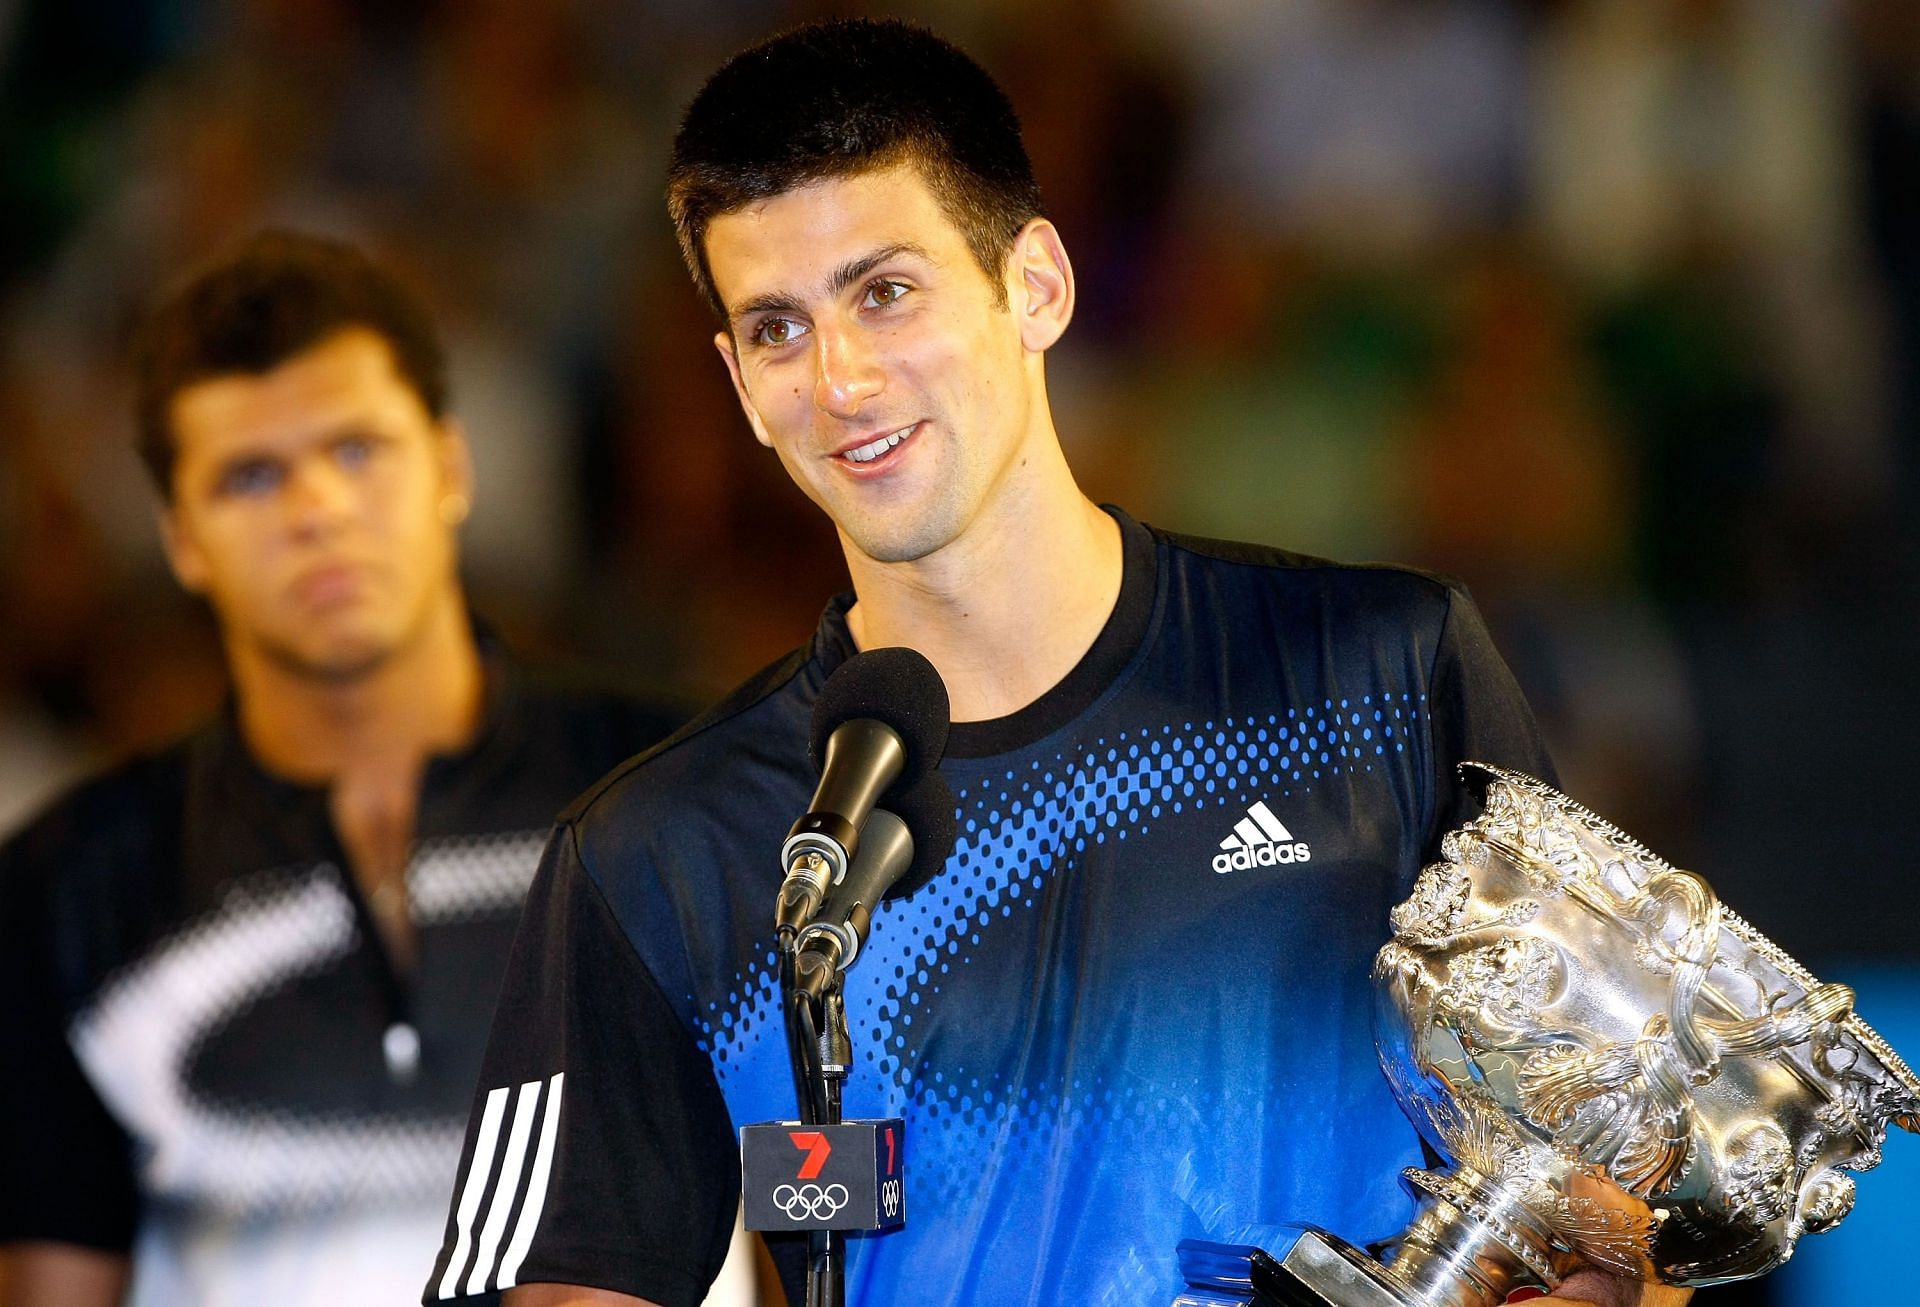 Novak Djokovic won the 2008 Australian Open